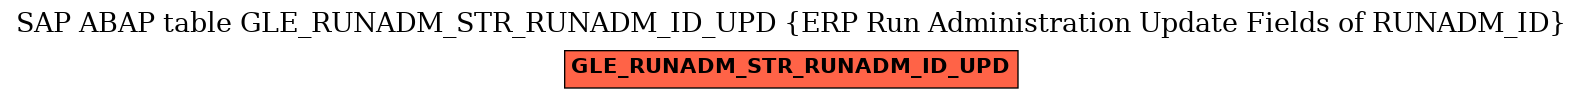 E-R Diagram for table GLE_RUNADM_STR_RUNADM_ID_UPD (ERP Run Administration Update Fields of RUNADM_ID)